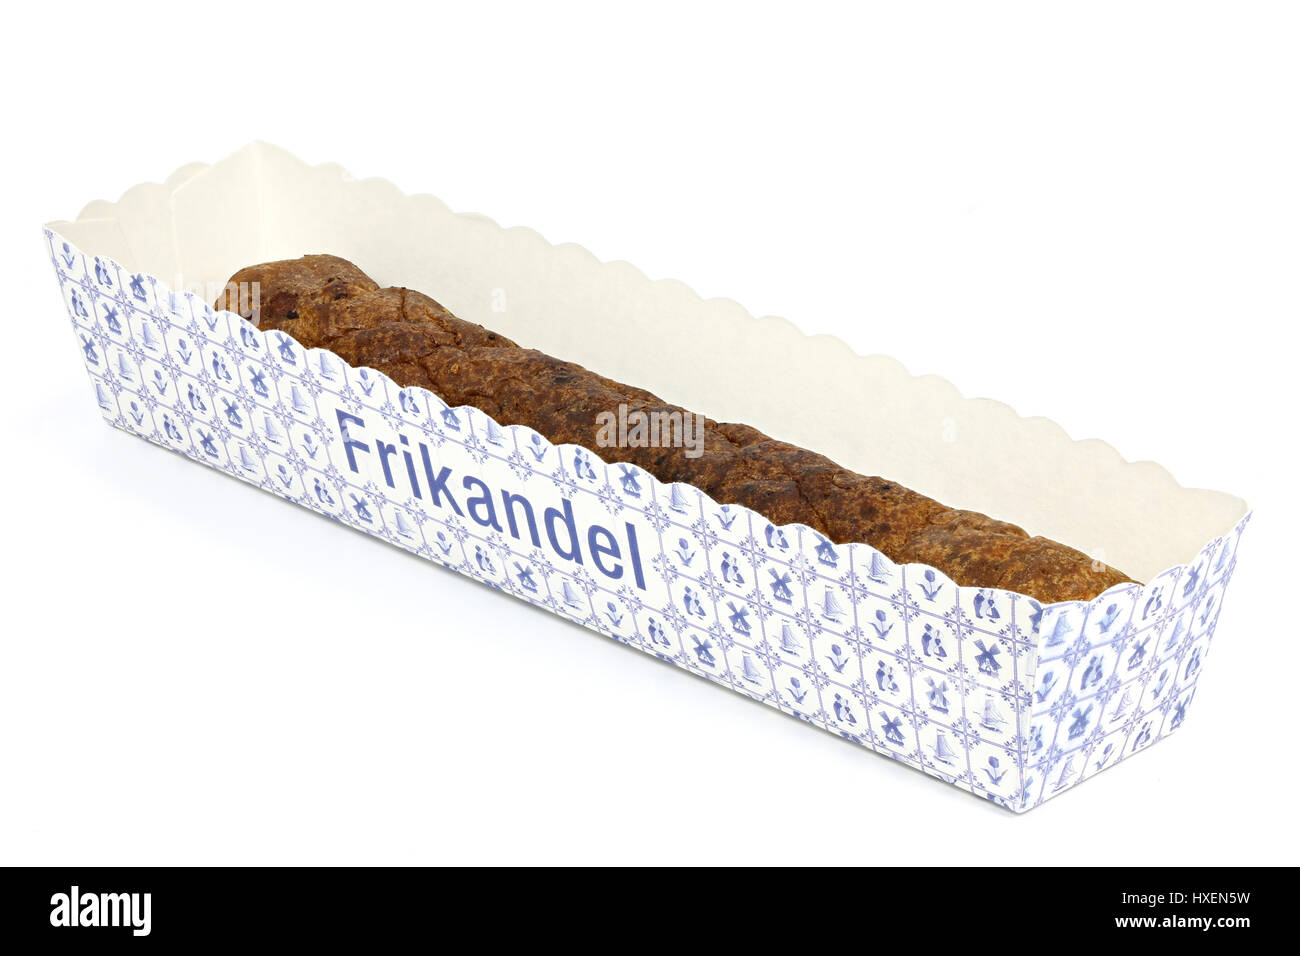 Frikandel holandés tradicional en un envase de cartón aislado sobre fondo blanco. Foto de stock